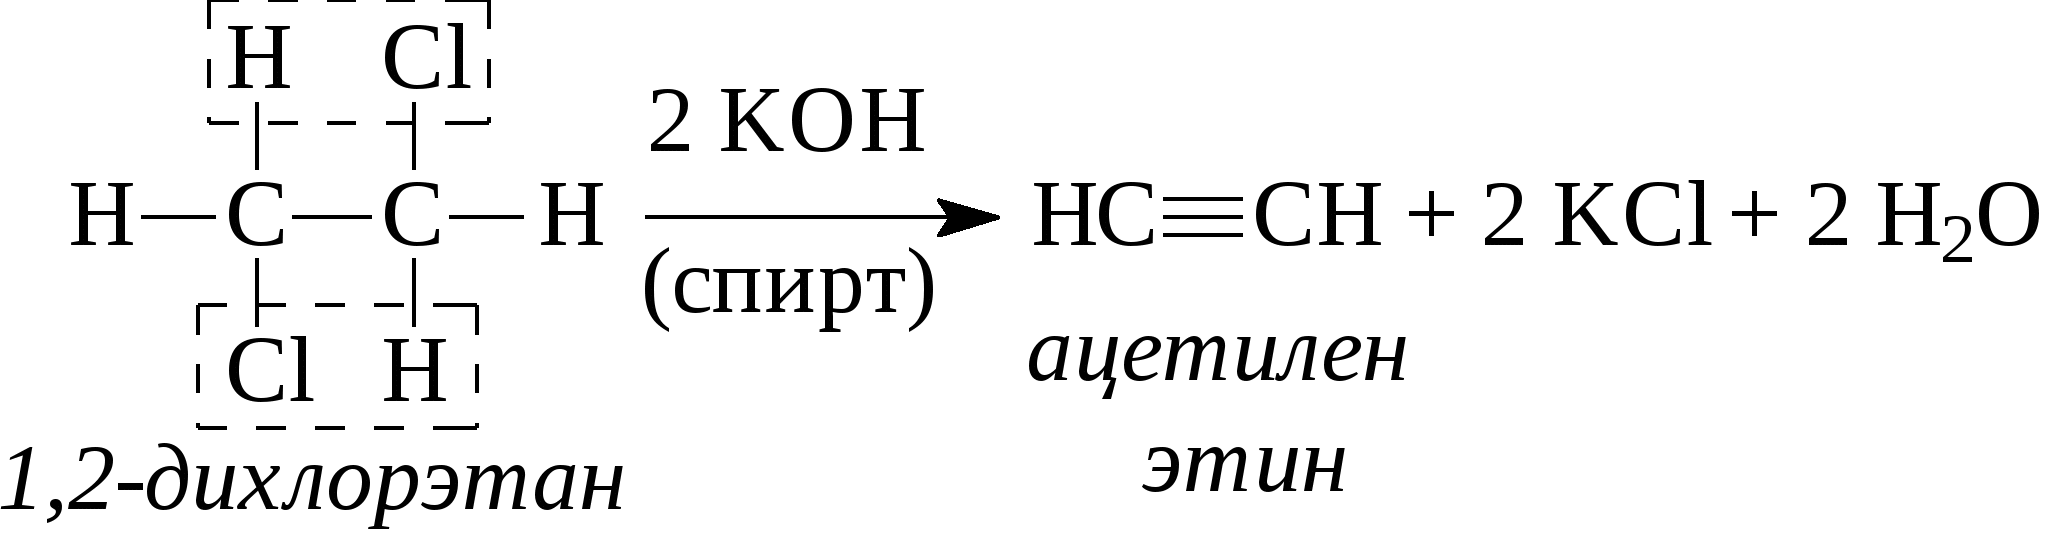 Ацетилен в 11 дихлорэтан. 1 2 Дихлорэтан этин. 1 2 Дихлорэтан ацетилен реакция. Ch кислотность алкинов. Ацетилен хлорэтан реакция